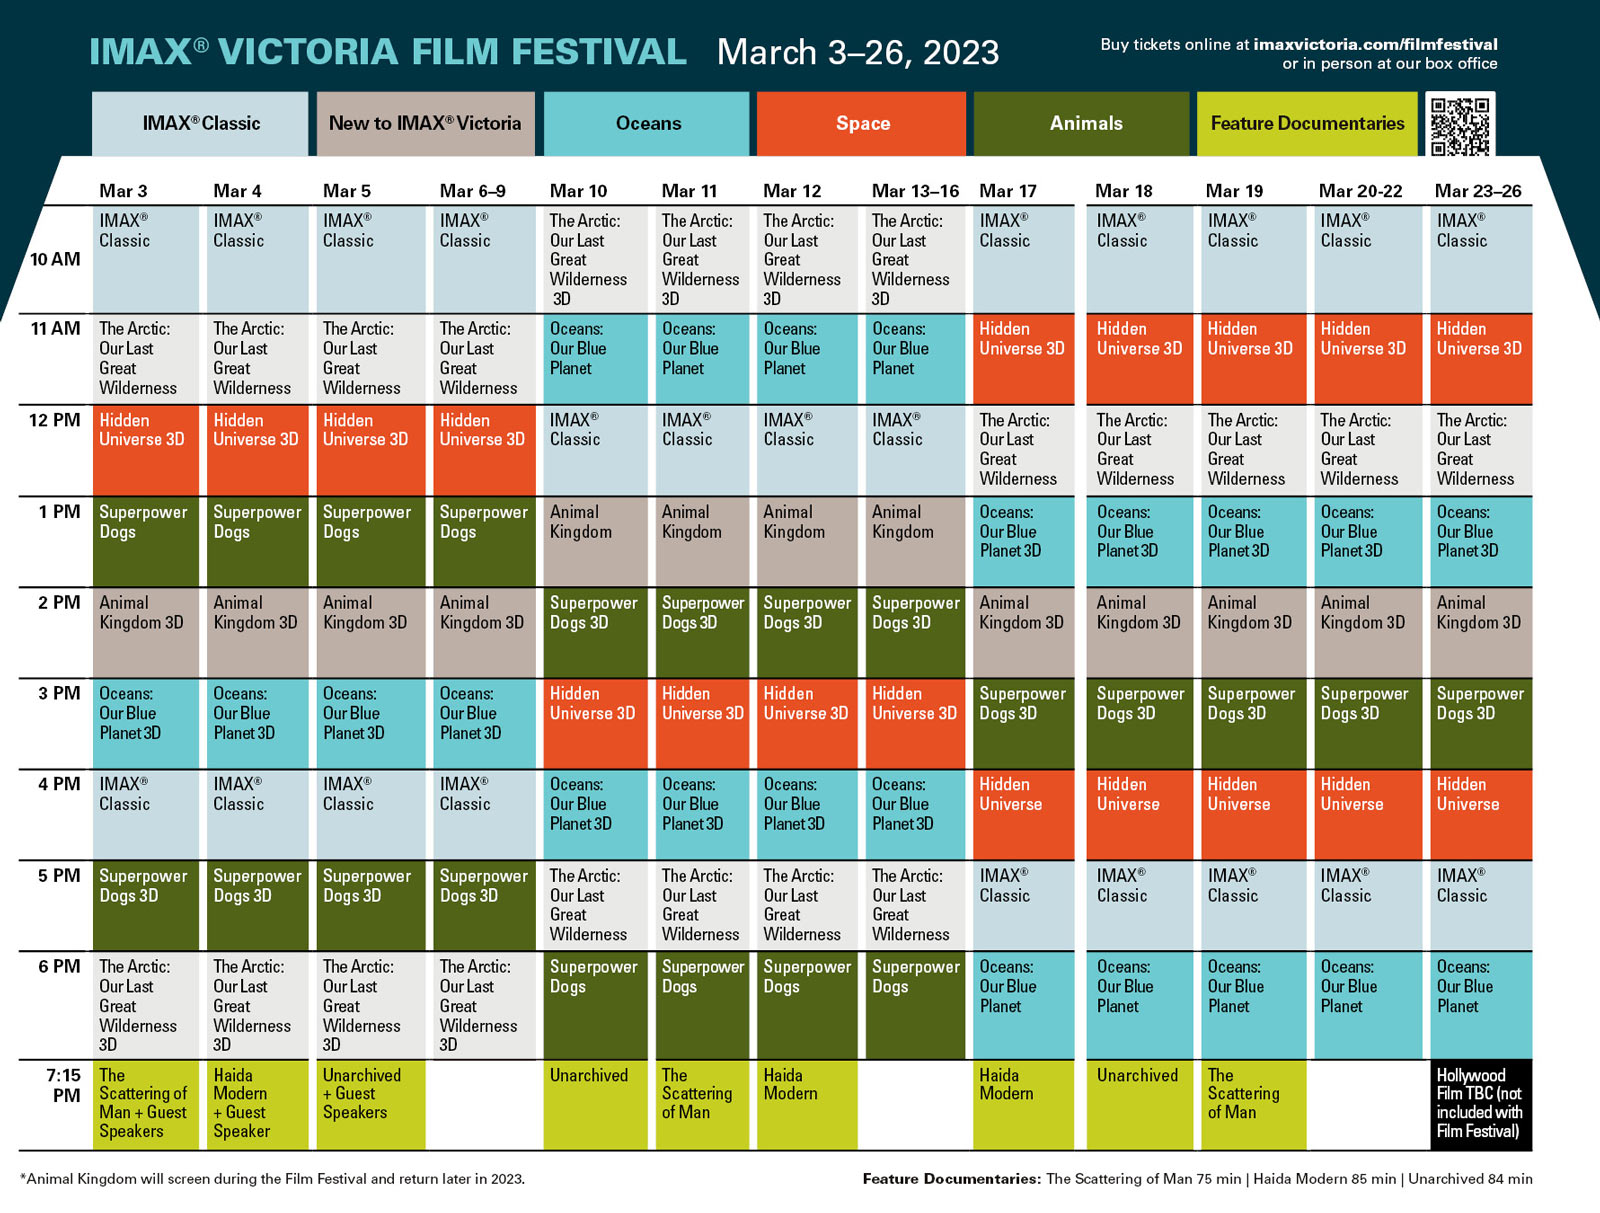 IMAX Film Festival Schedule